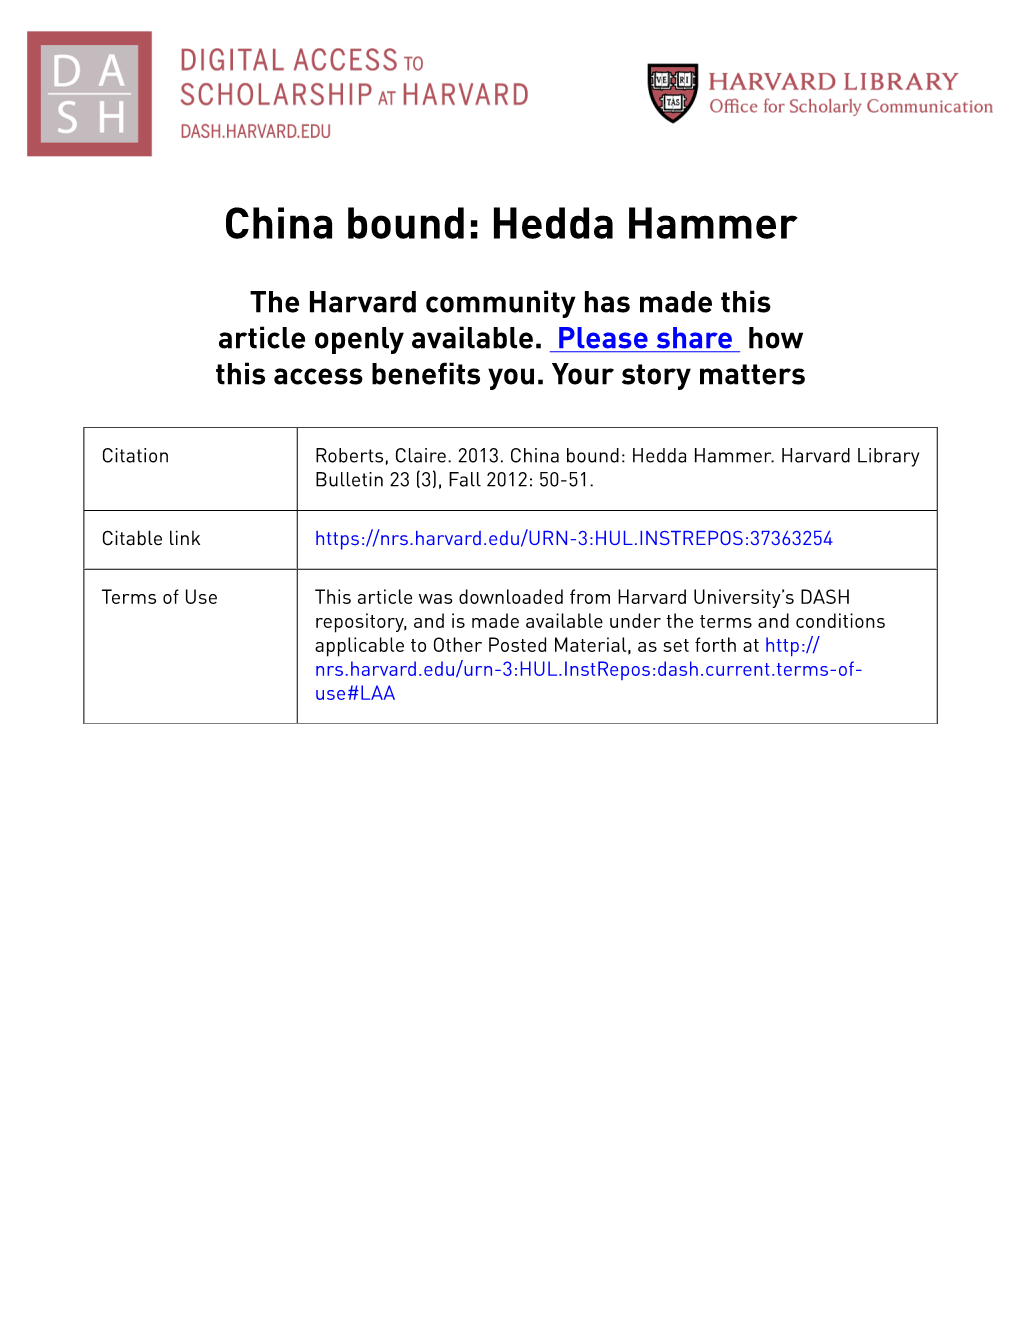 China Bound: Hedda Hammer